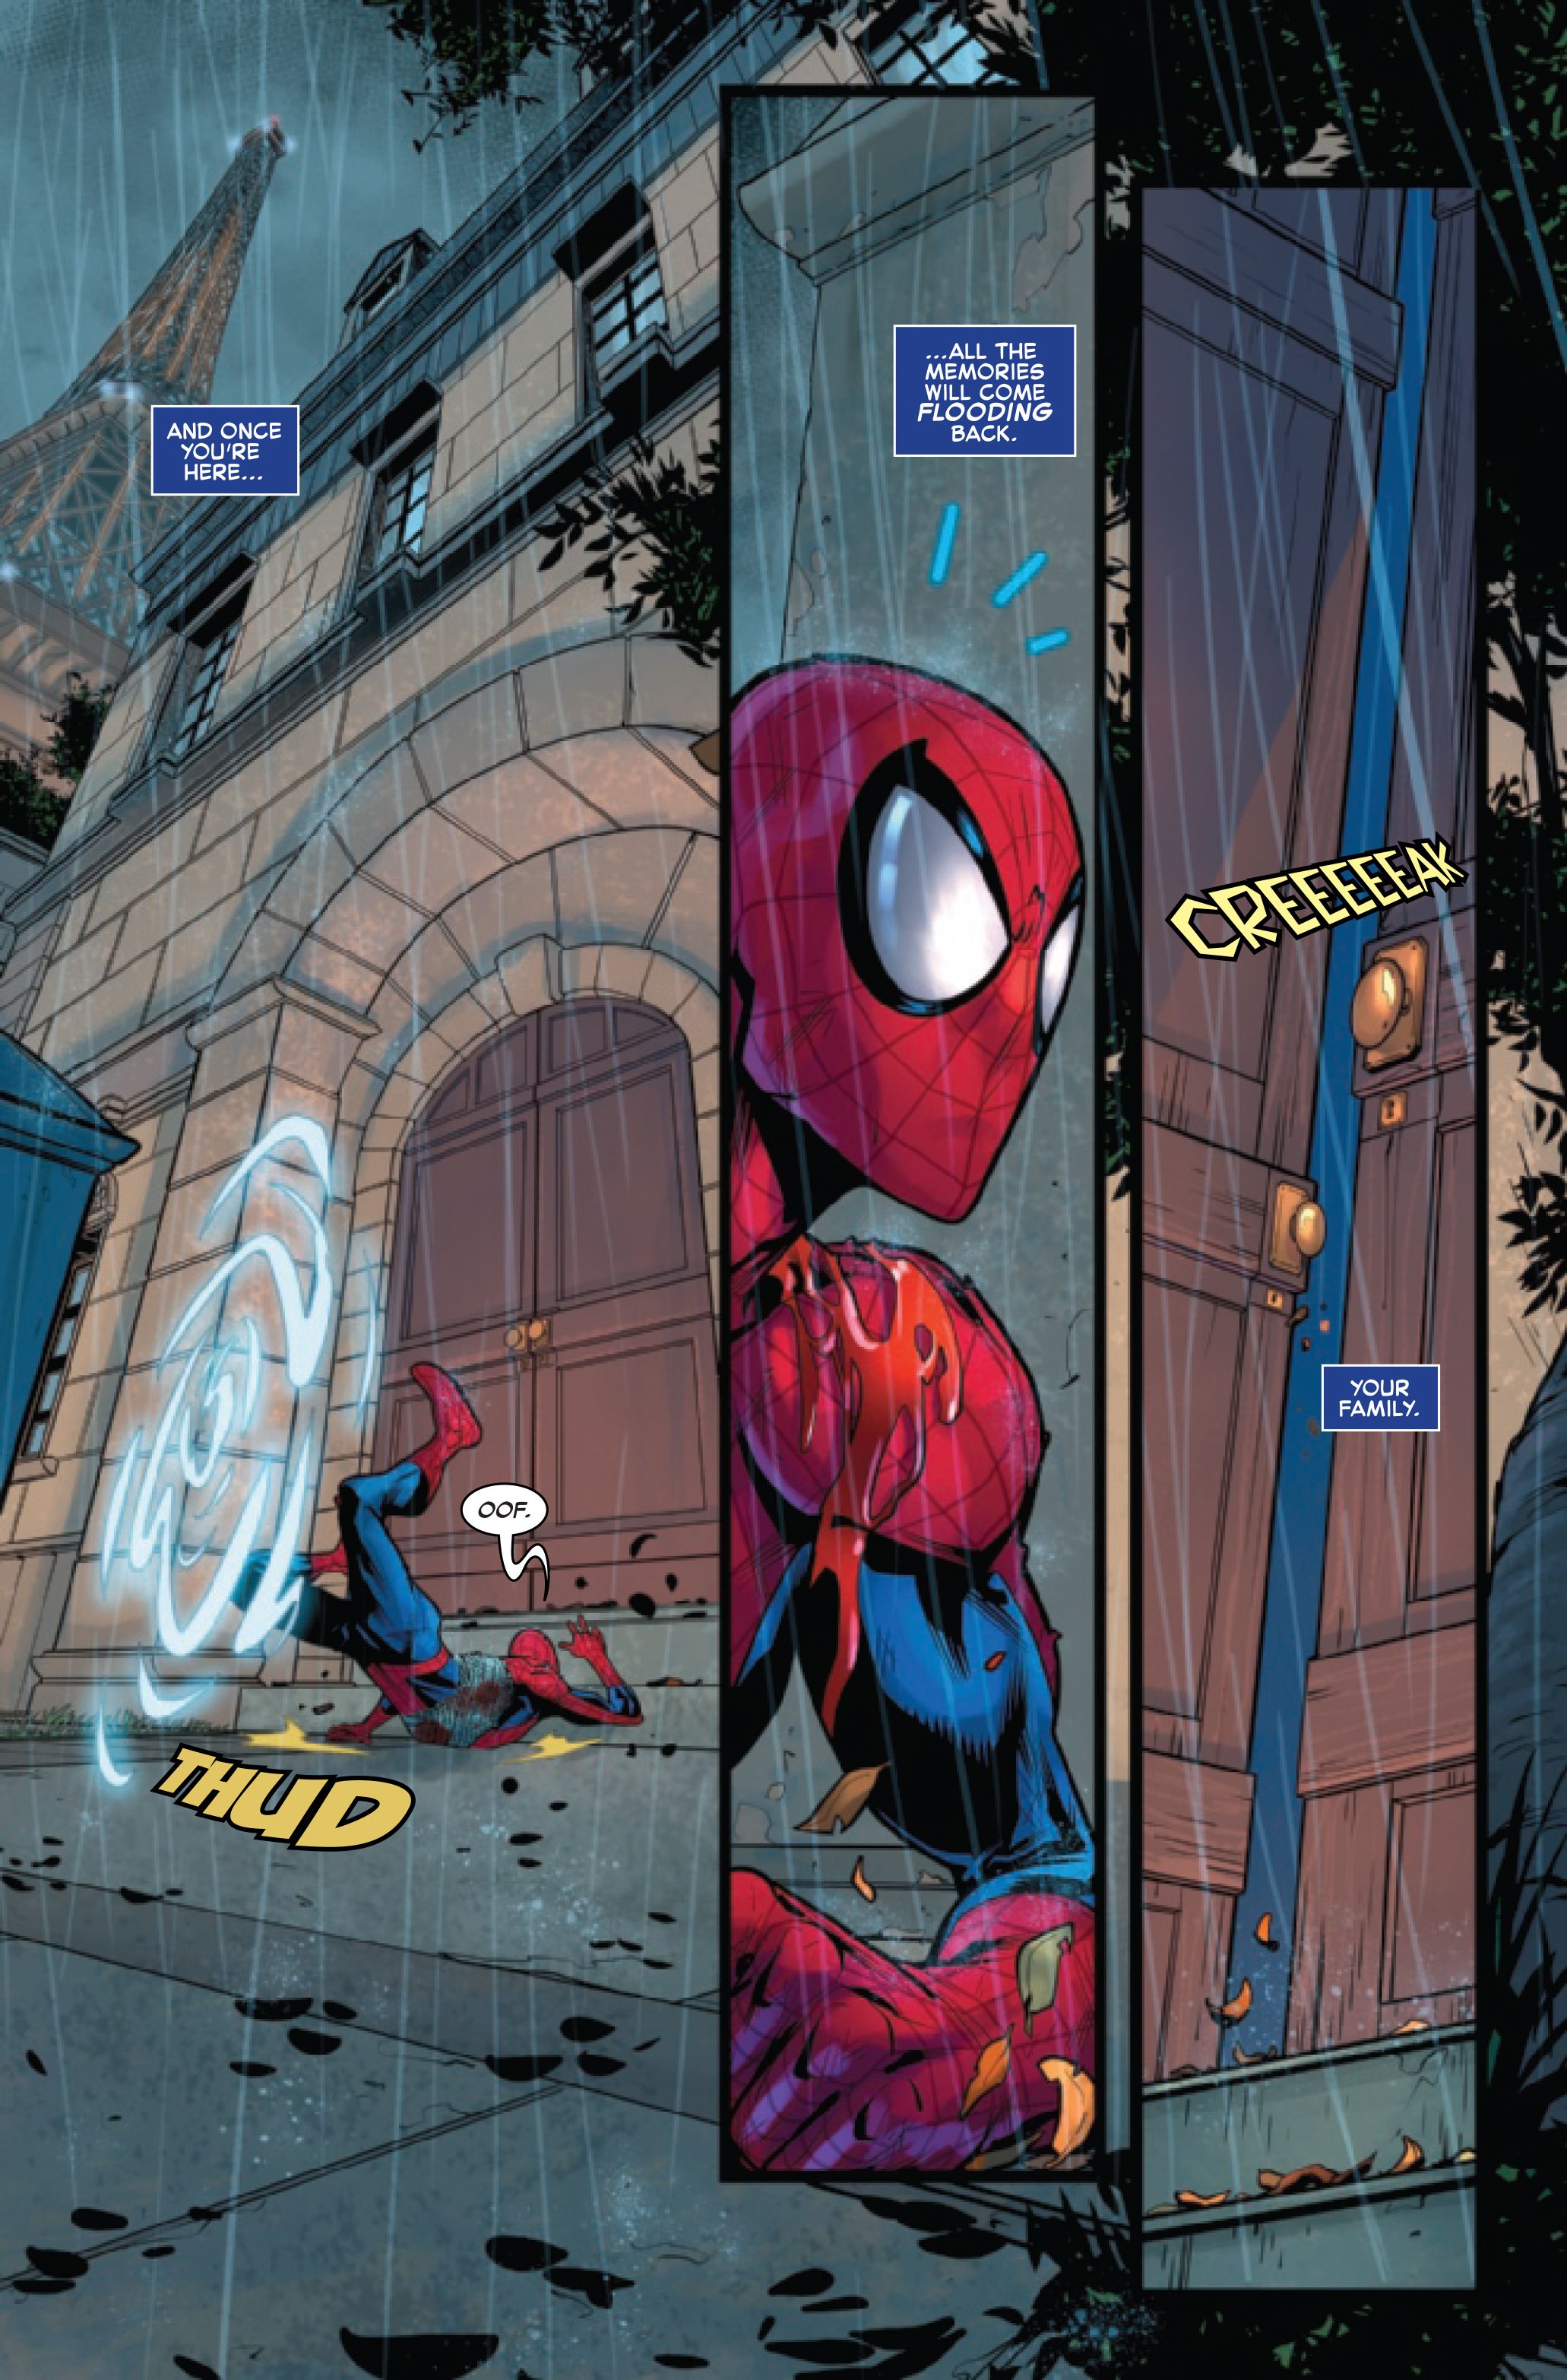 Page 4 of Amazing Spider-Man #73, by Nick Spencer, Zé Carlos, Carlos Gómez and Marcelo Ferreira.